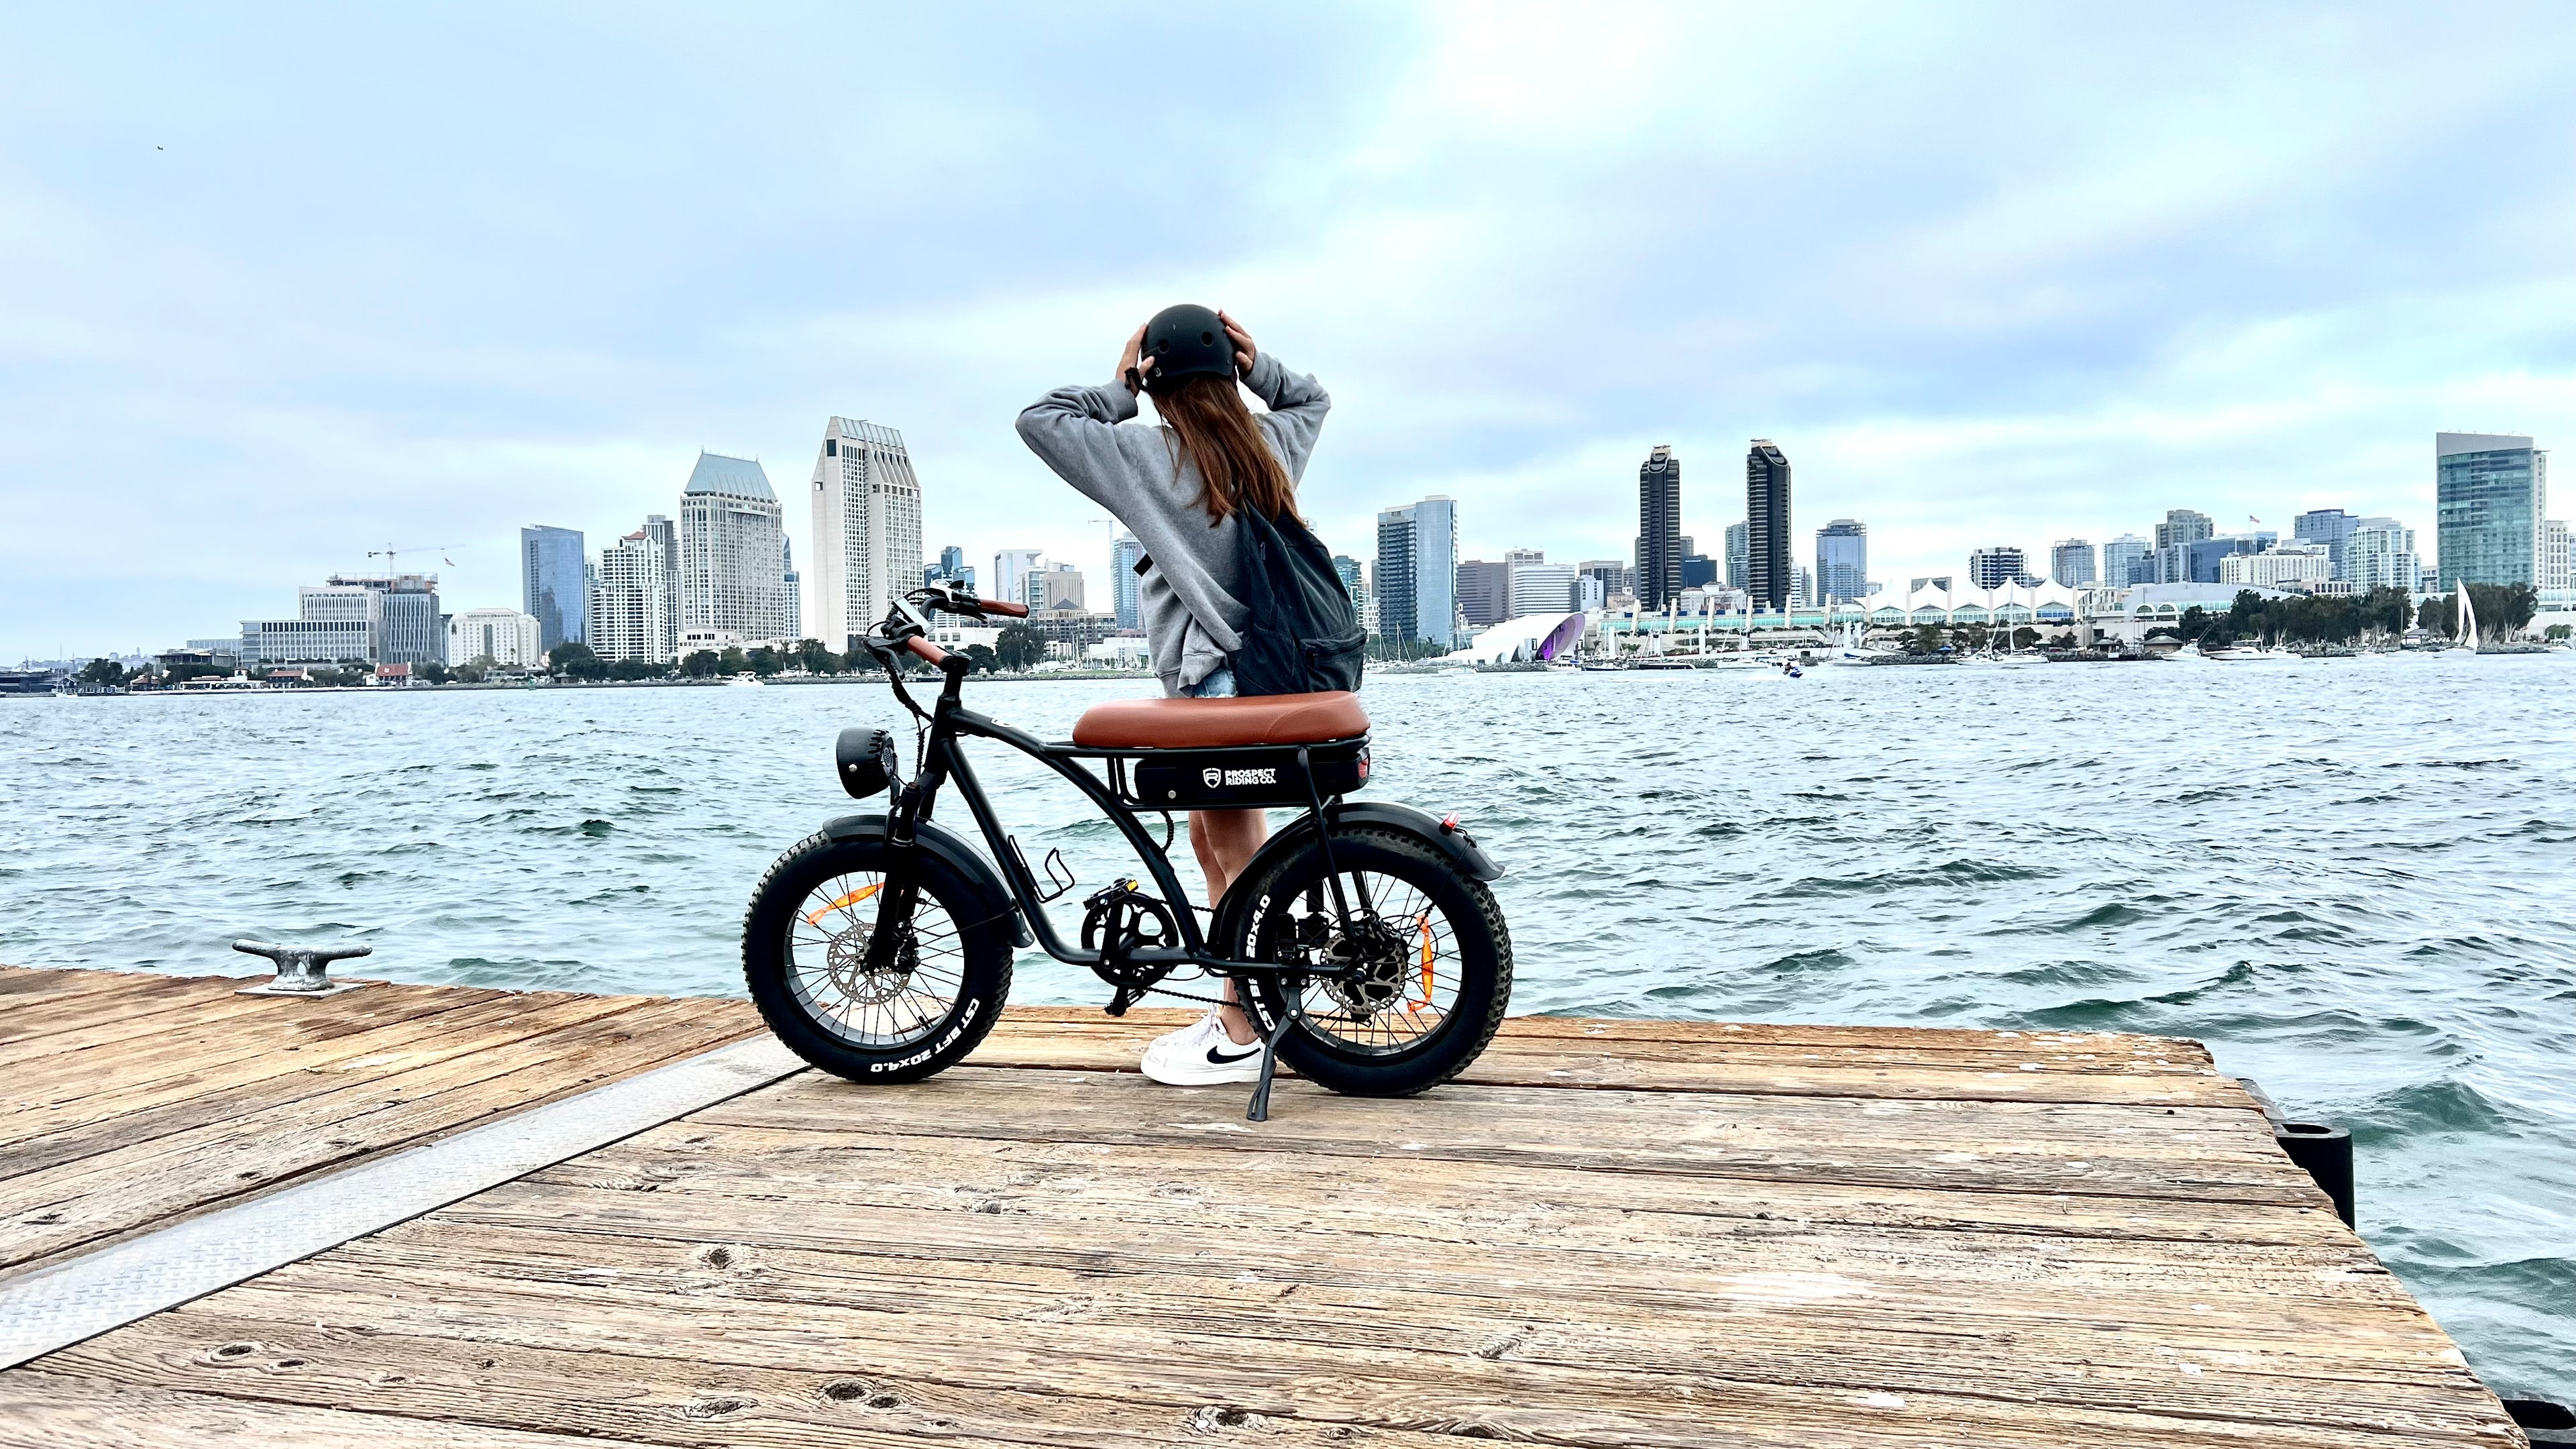 Laguna e-bike on the Coronado Ferry Landing with a girl looking on the big city skyline